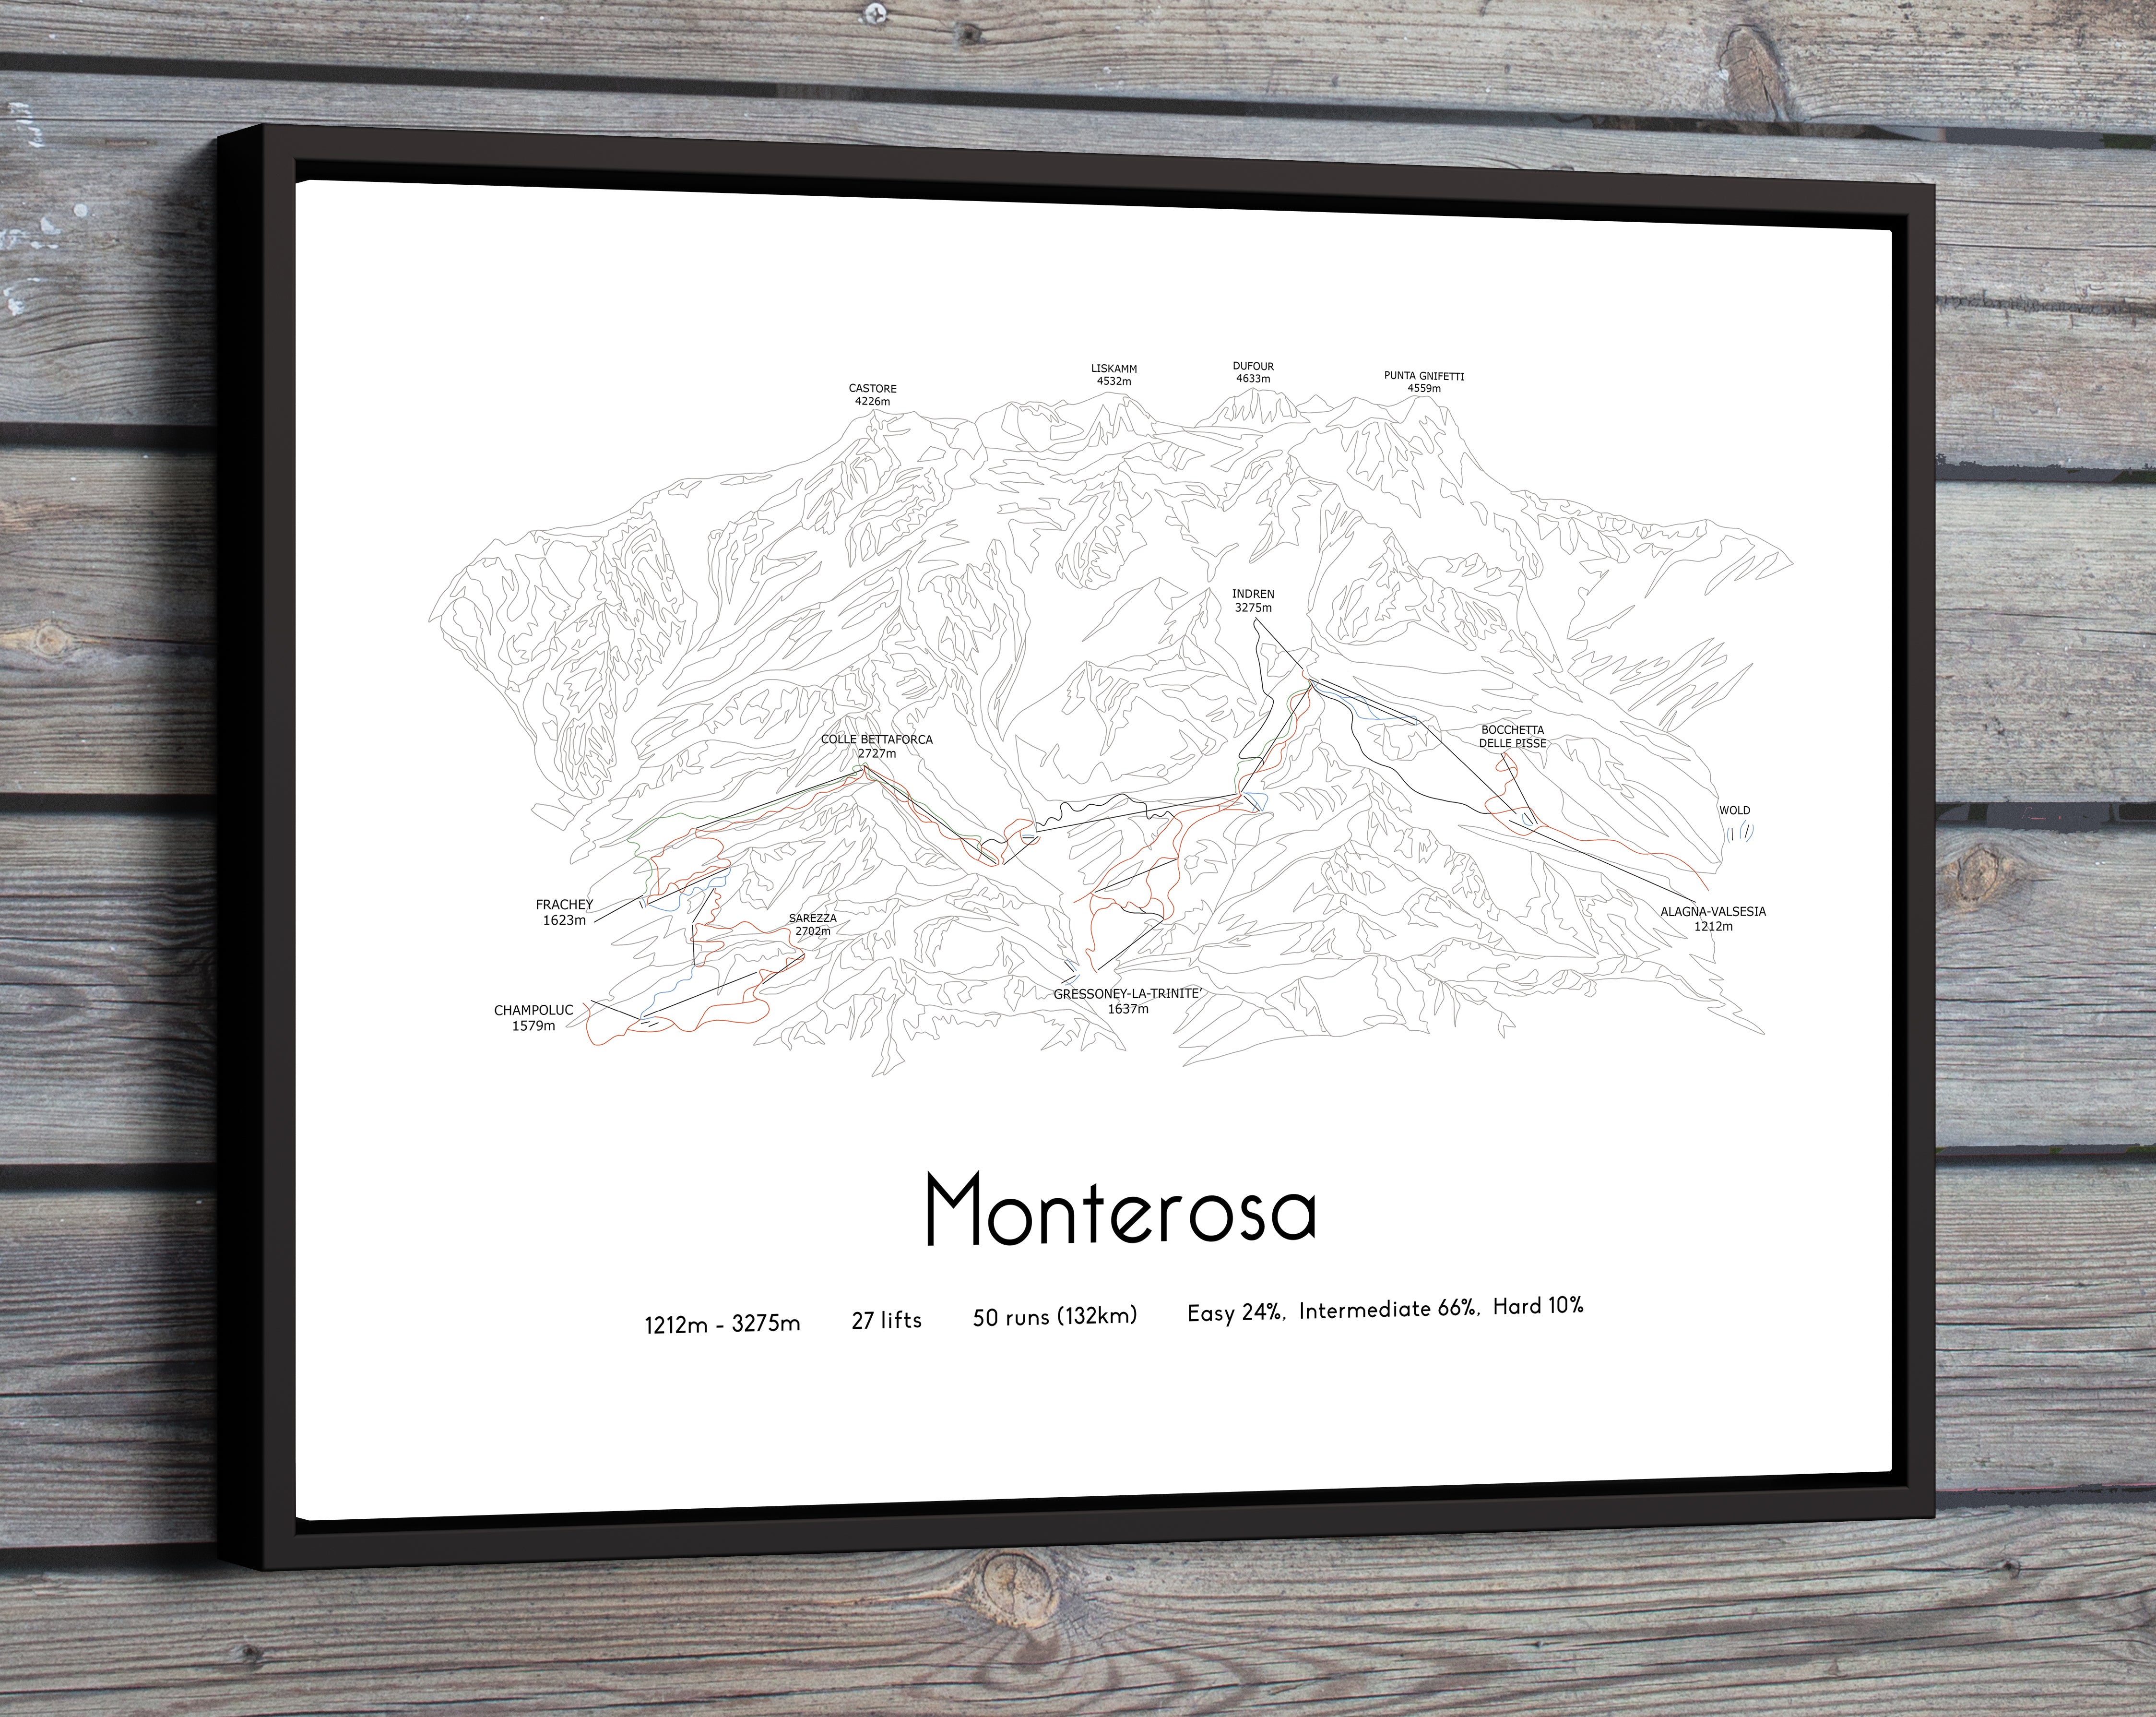 Monterosa - Champoluc Gressoney Alagna